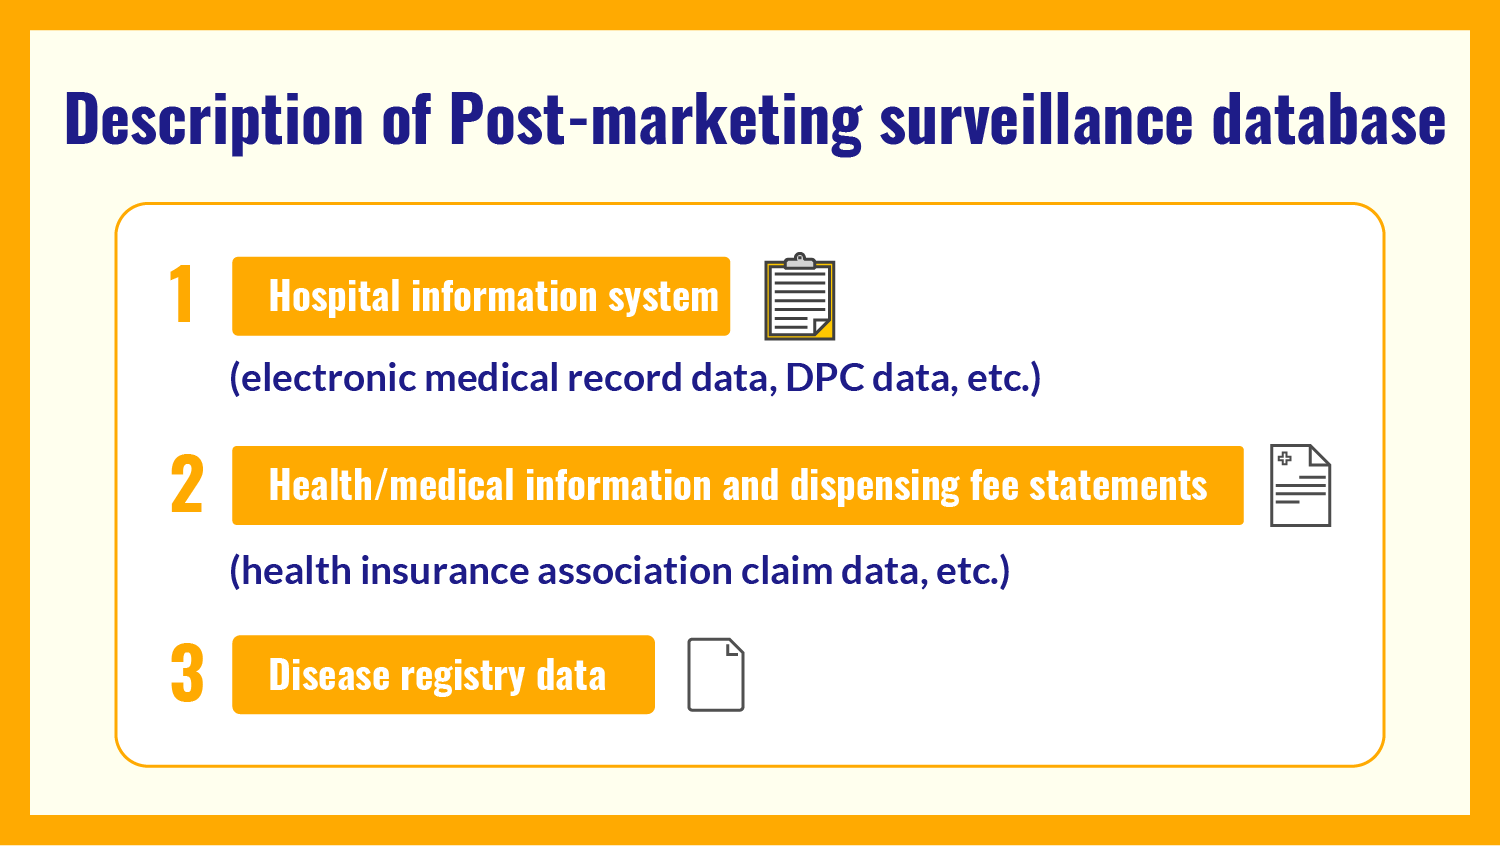 Description of Post-marketing surveillance database